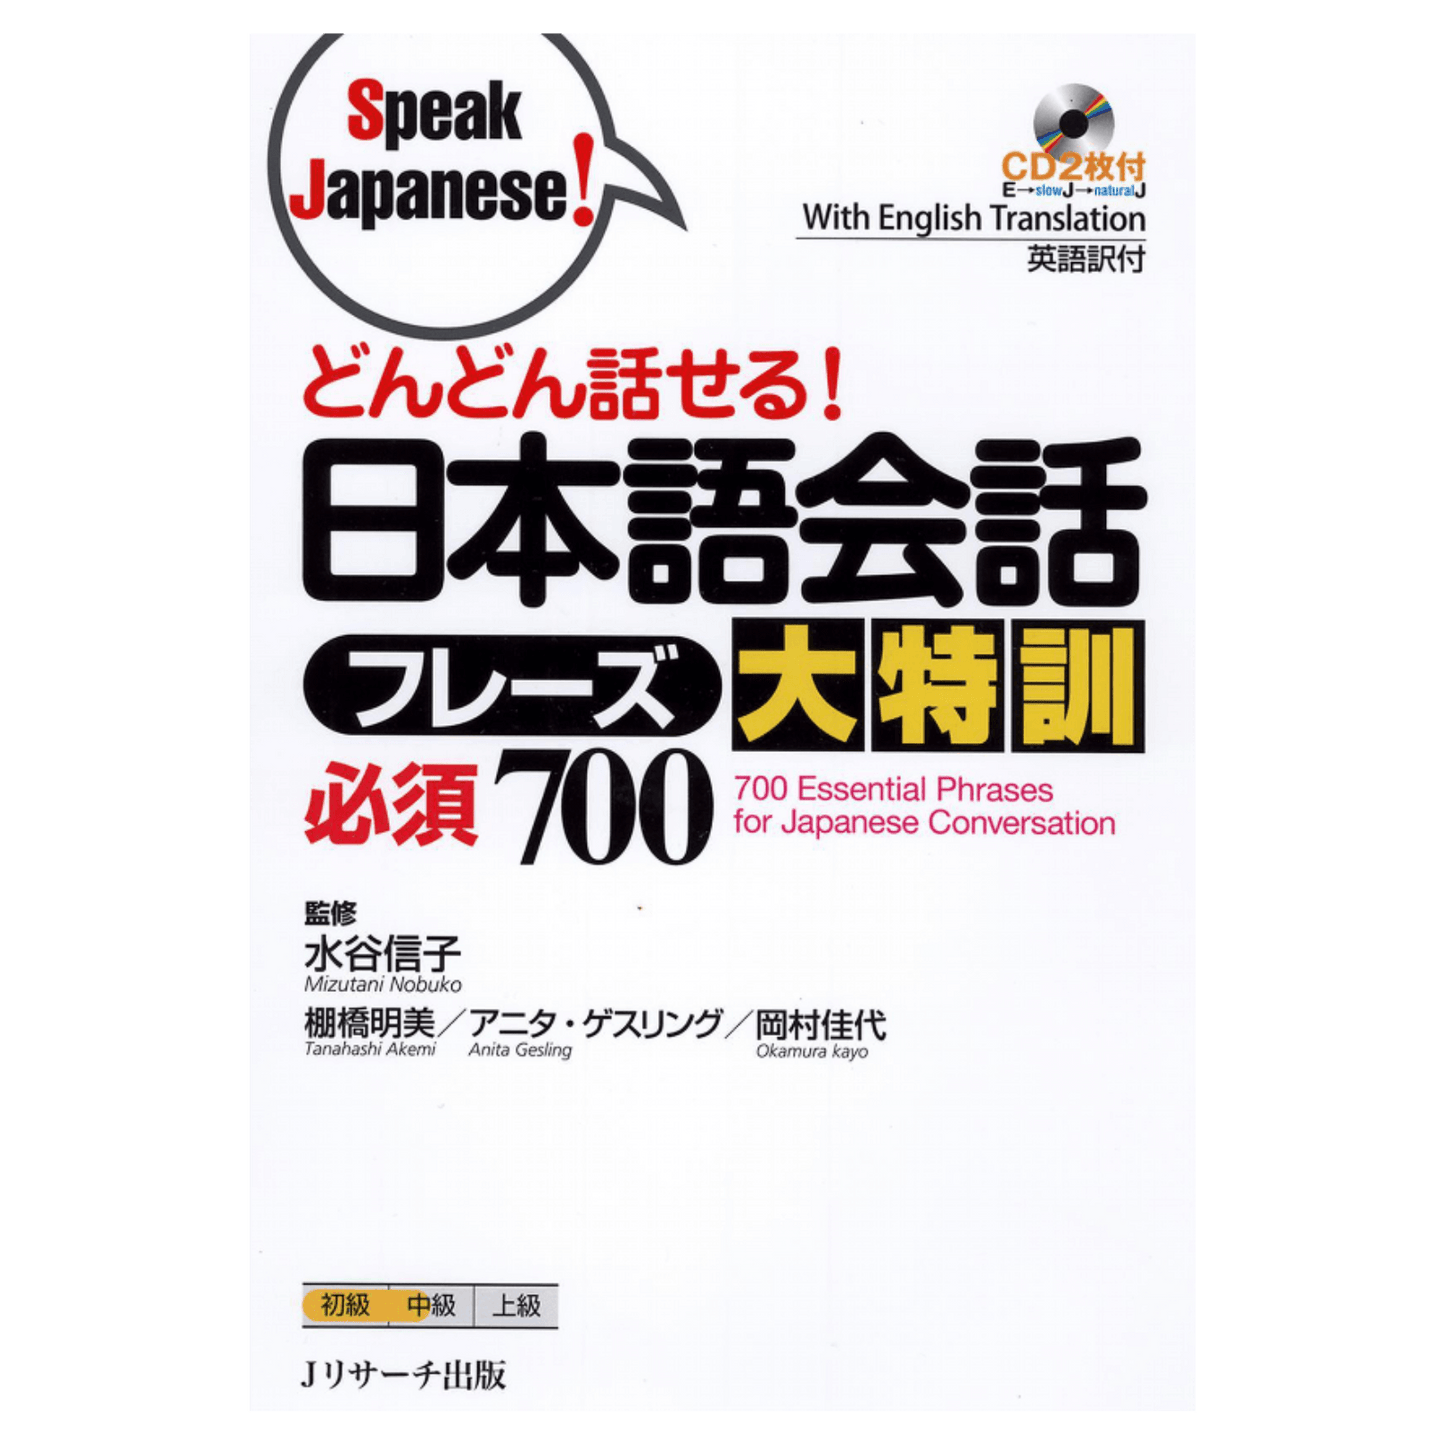 Manual Japonês | Fala japones! -どんどん話せる! ChitoroShop